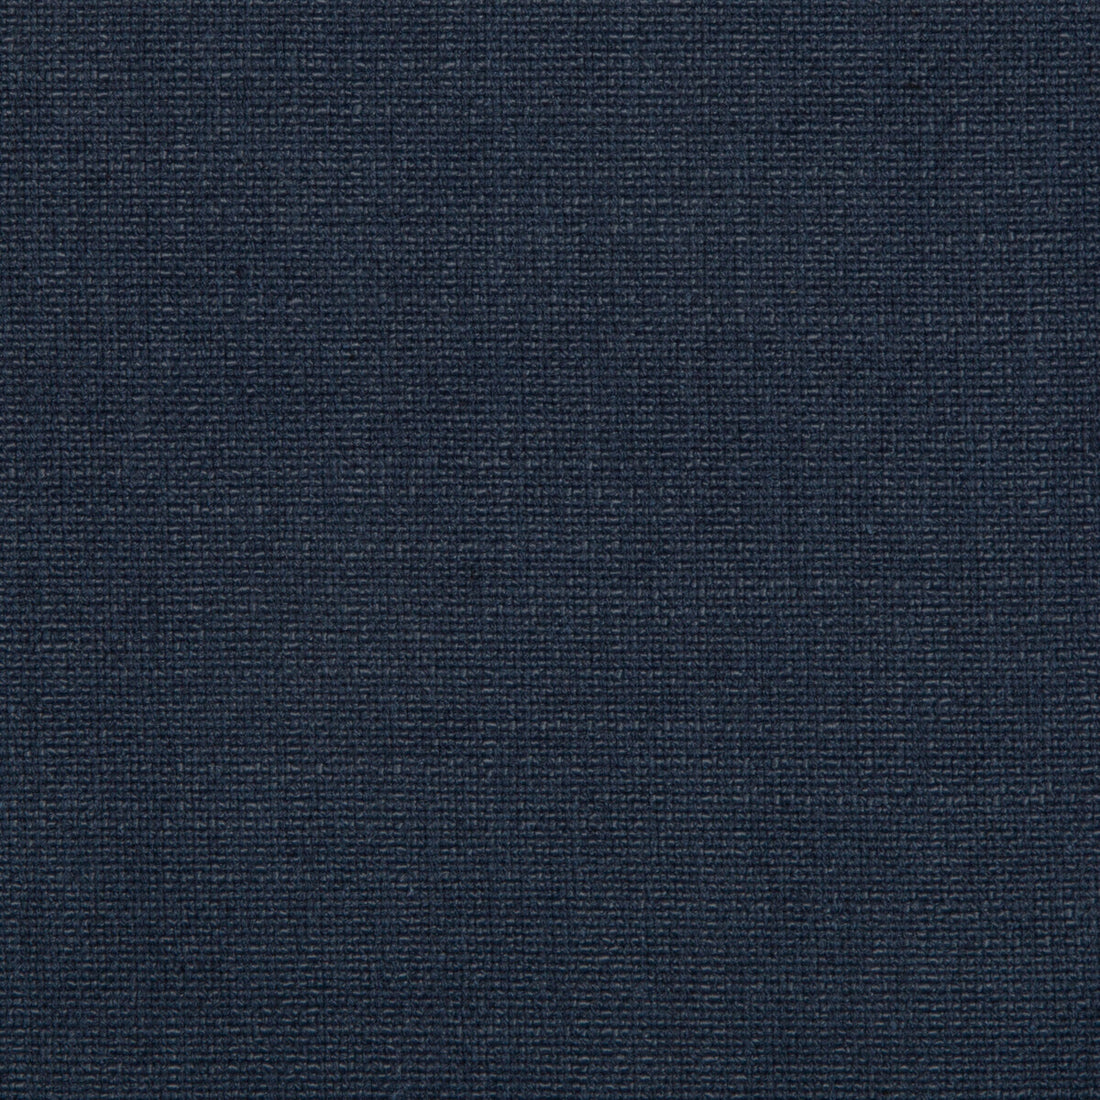 Kravet Smart fabric in 35226-5050 color - pattern 35226.5050.0 - by Kravet Smart in the Performance Kravetarmor collection